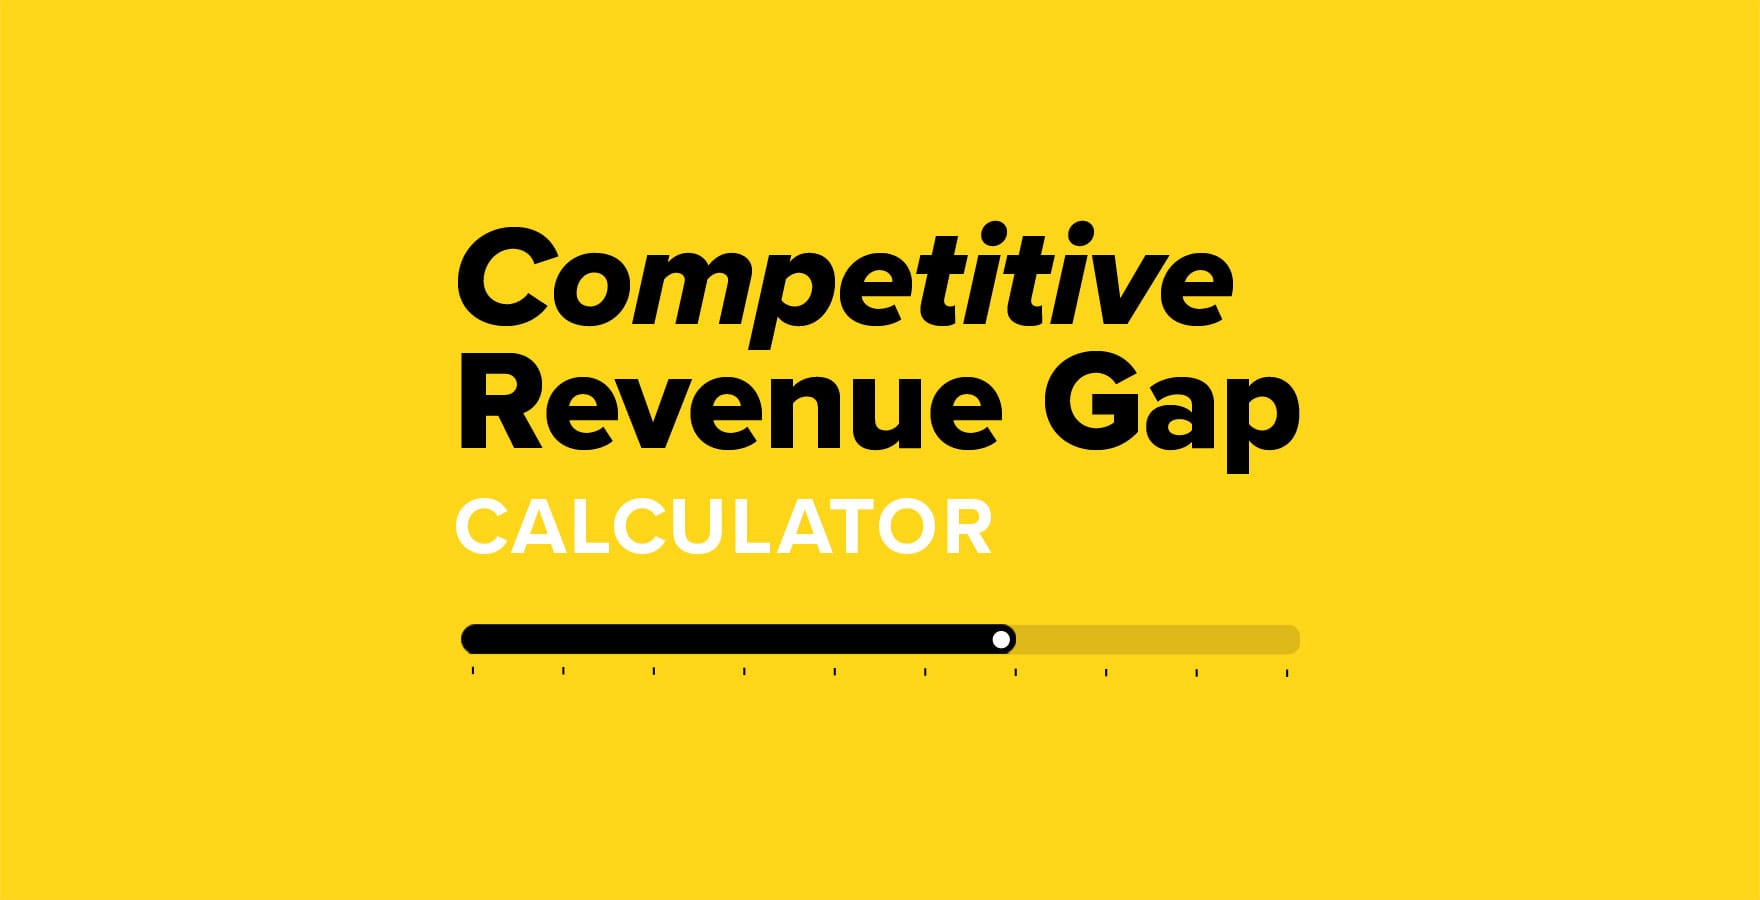 Blog_Competitive-Revenue-Gap-Calculator-Yellow